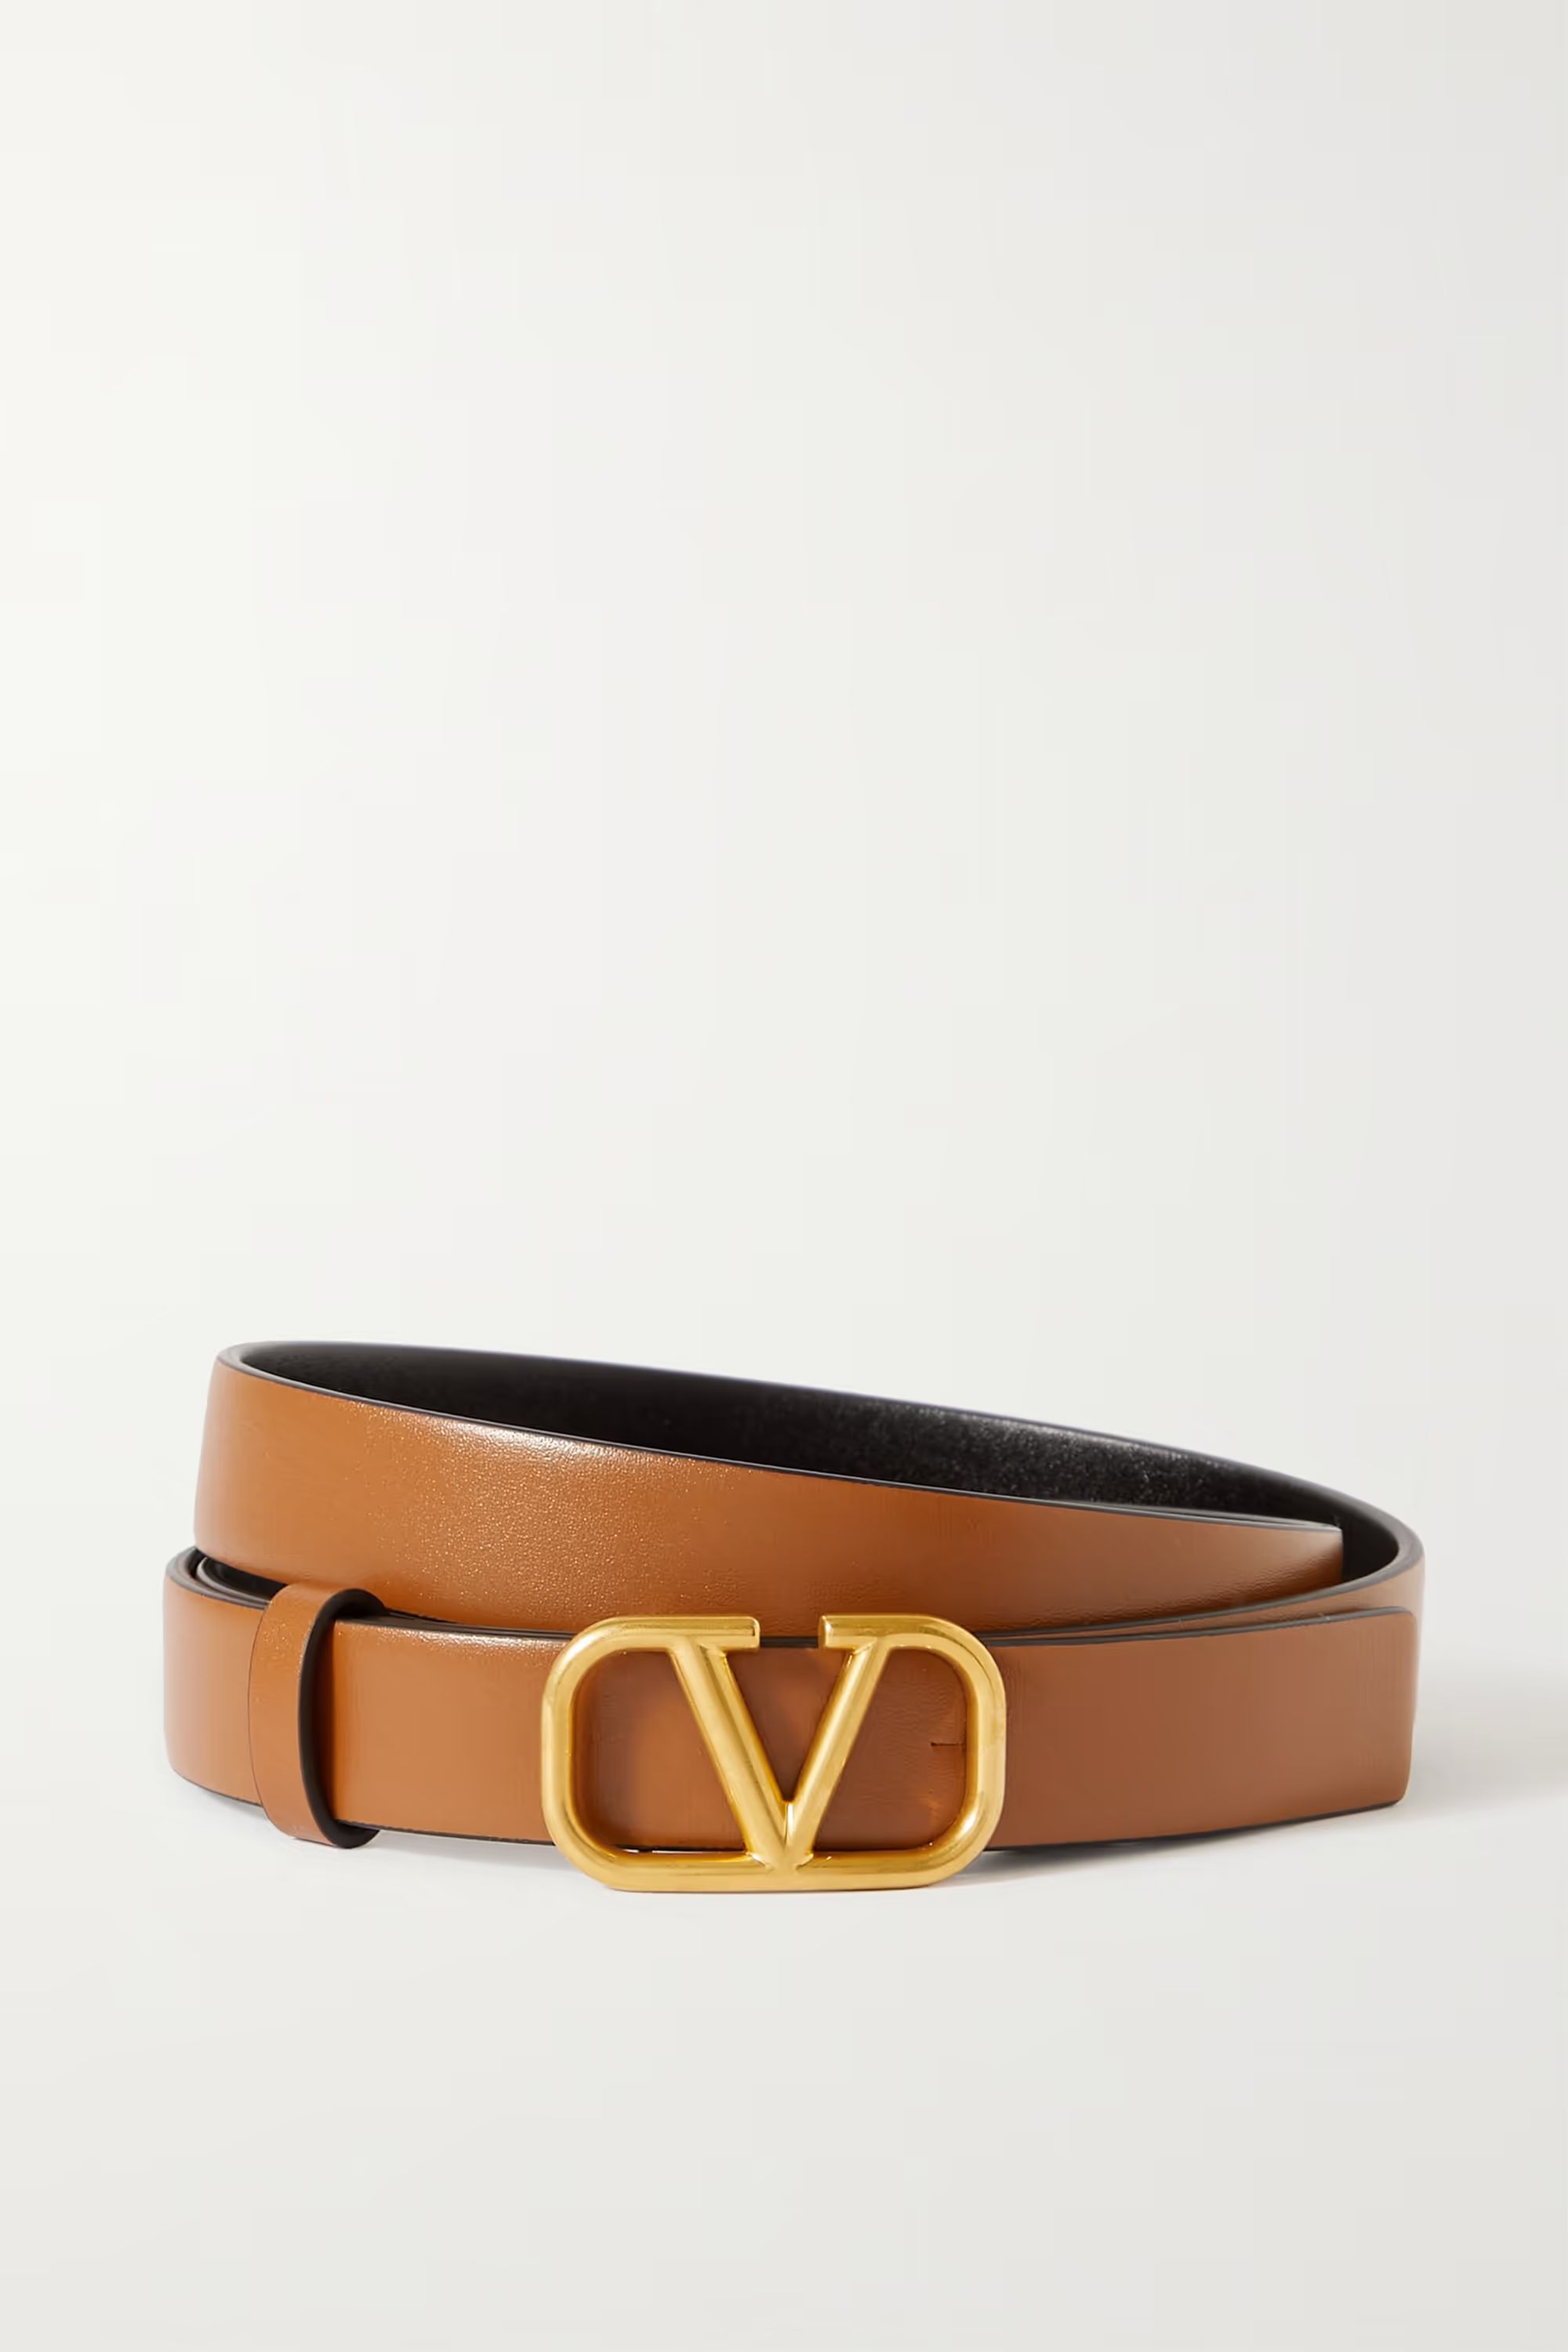 VALENTINOValentino Garavani VLOGO reversible leather belt | NET-A-PORTER (US)